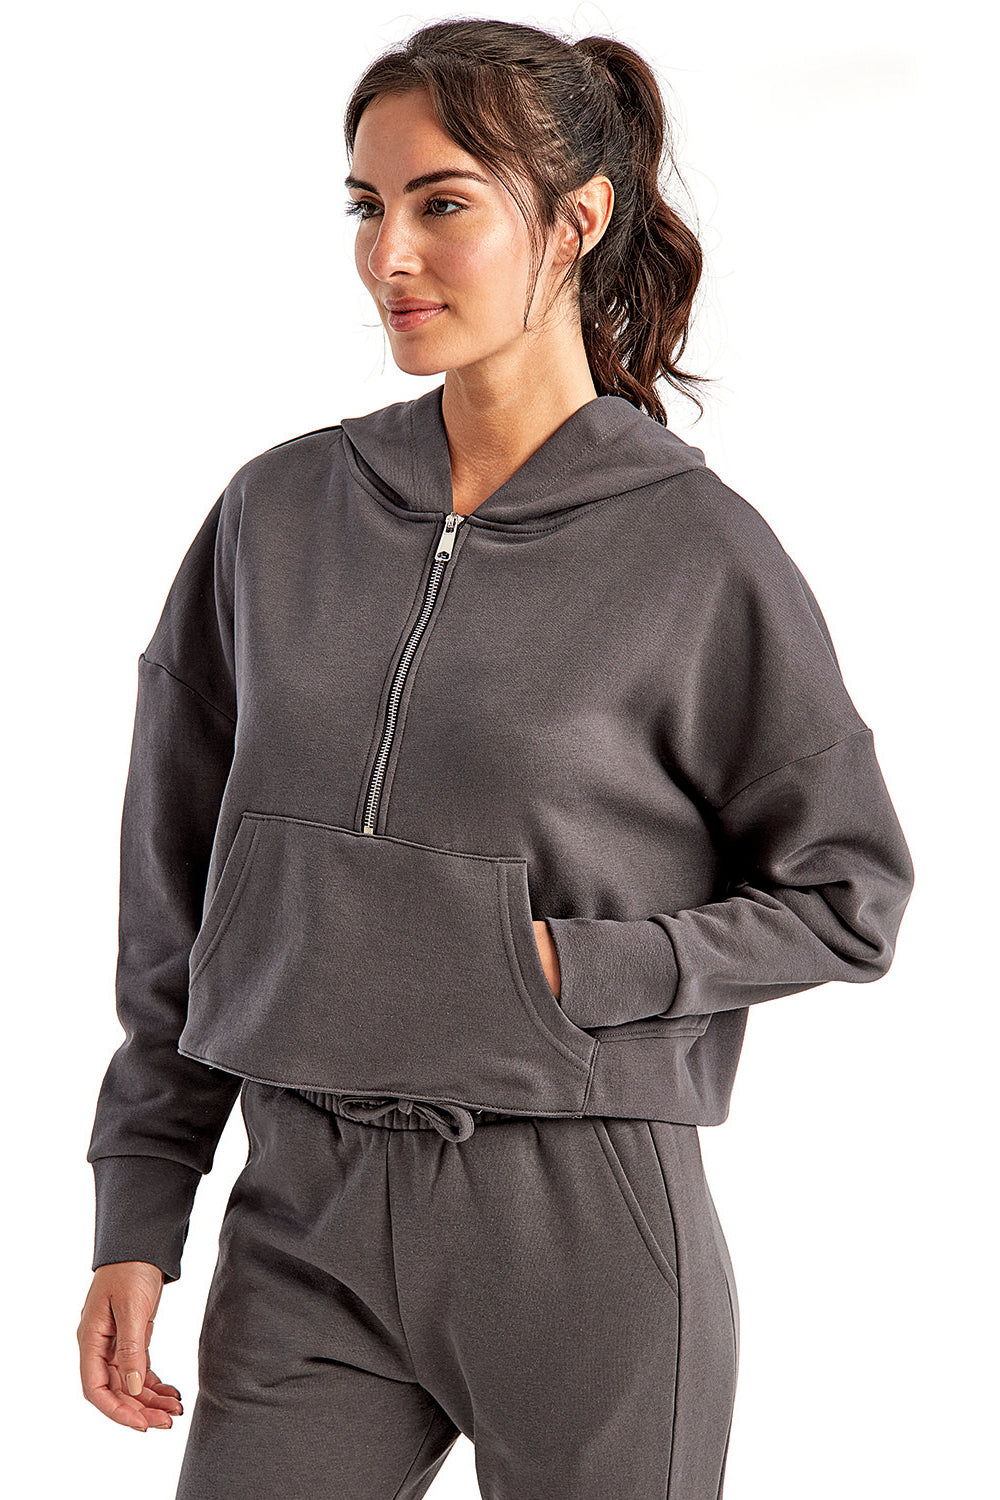 TriDri TD077 Womens Alice 1/4 Zip Hooded Sweatshirt Hoodie Charcoal Grey 3Q